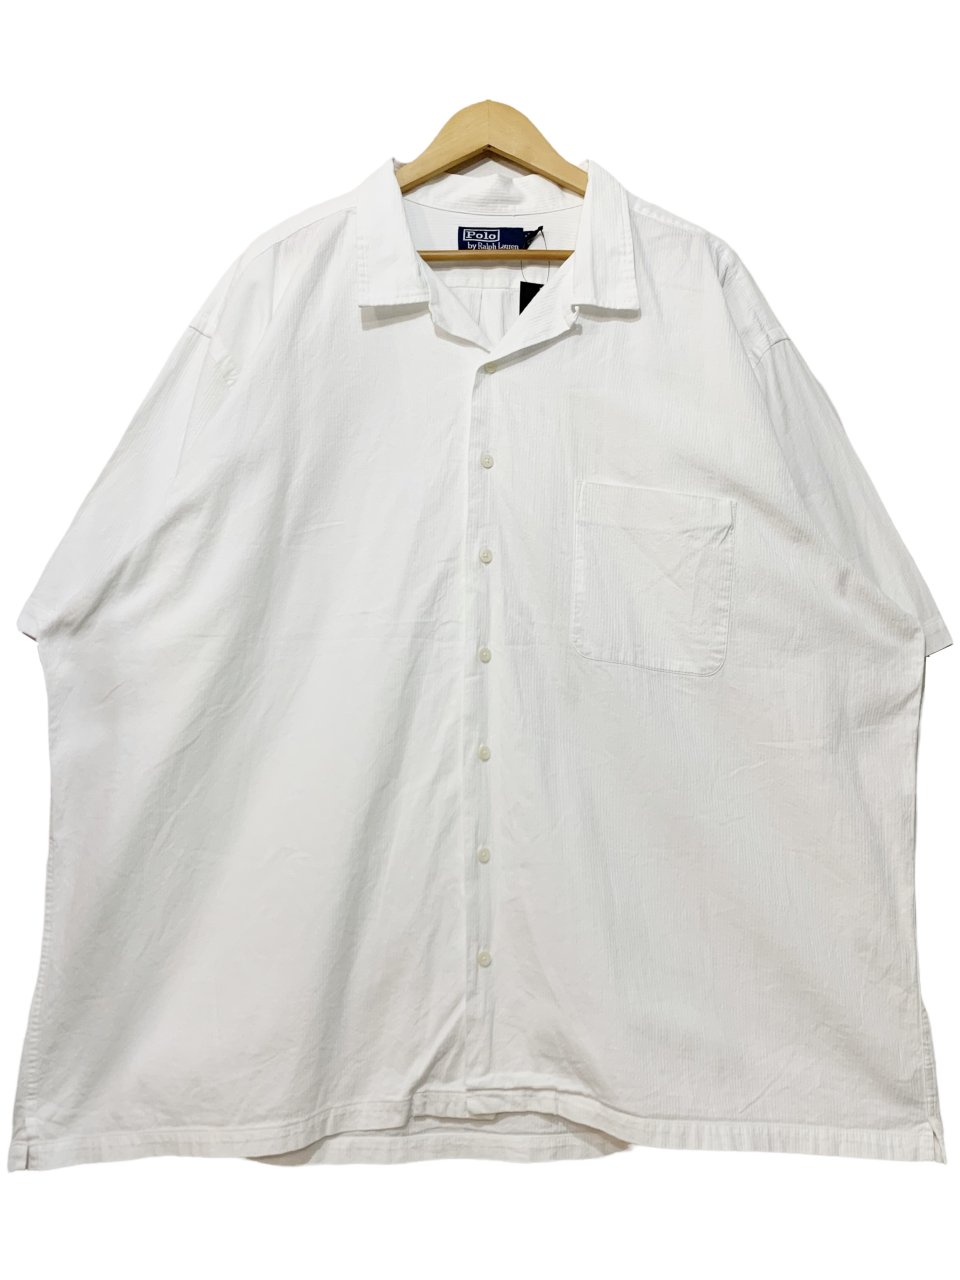 Polo Ralph Lauren Seersucker Cotton Open Collar S/S Shirt 白 3XB ポロラルフローレン  半袖 開襟シャツ オープンカラーシャツ シアサッカー - NEWJOKE ONLINE STORE